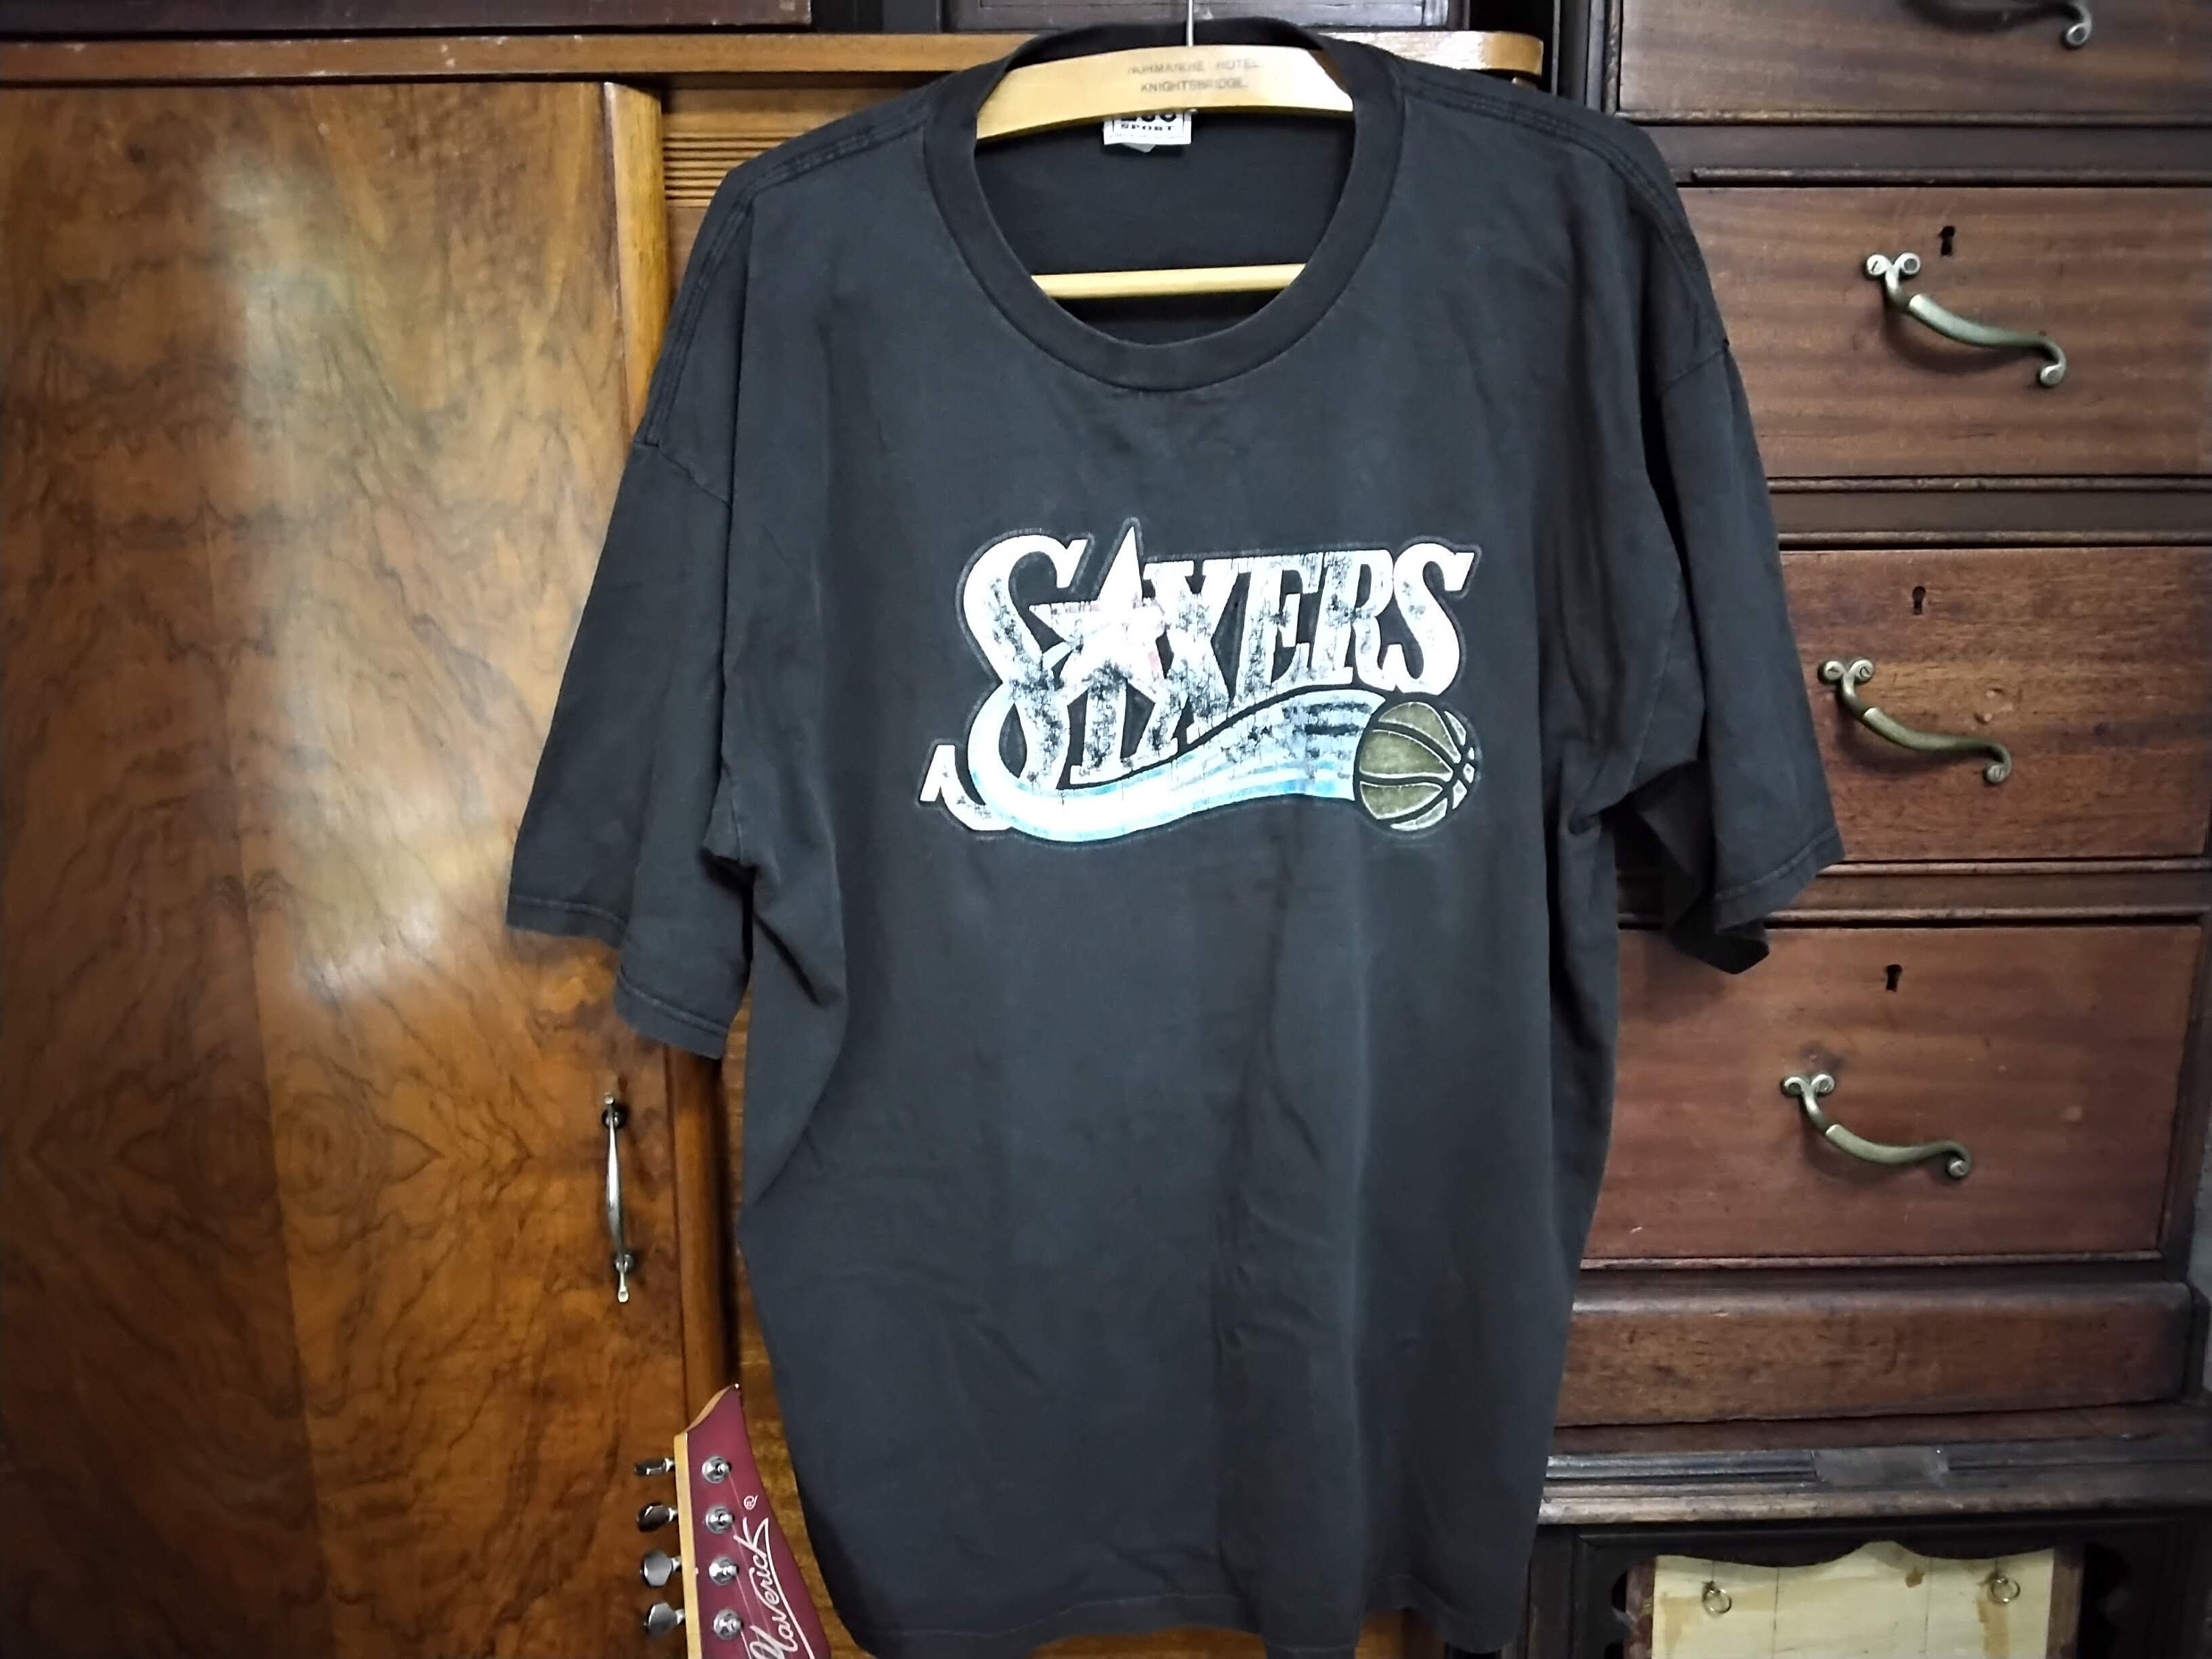 James Harden Philadelphia 76ers 90s Style Vintage Bootleg Tee graphic shirt